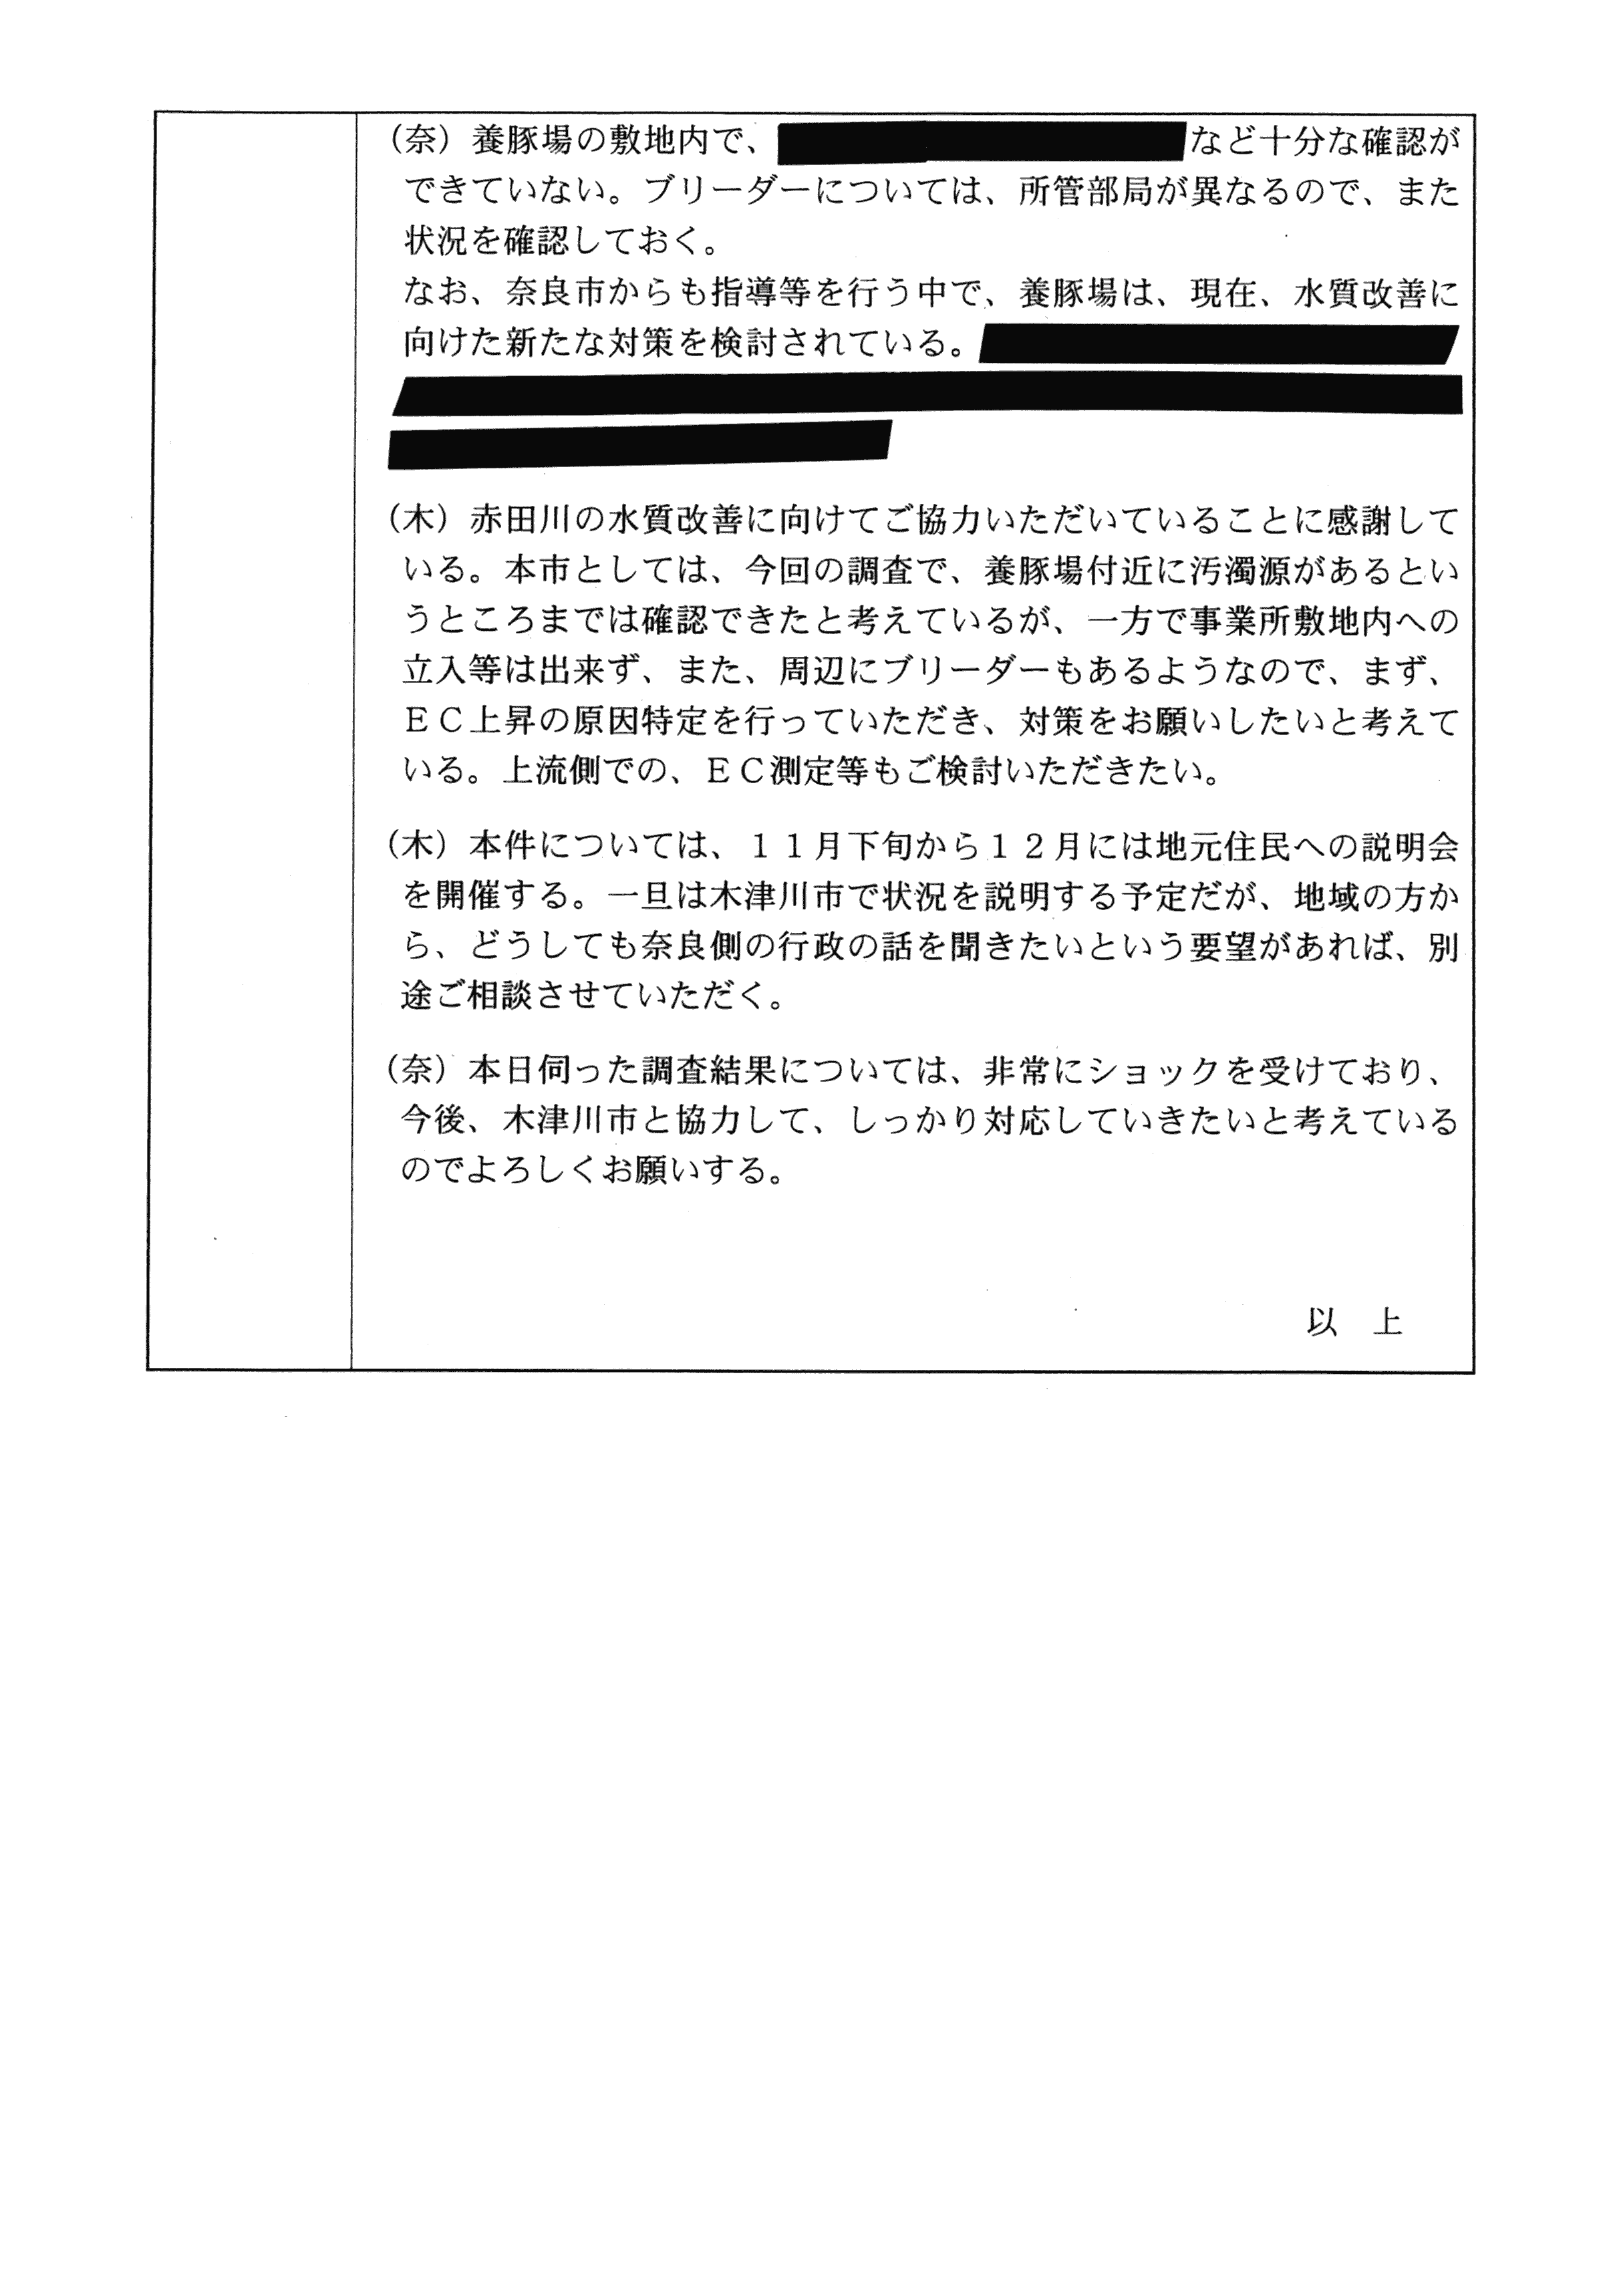 平成29年11月8日-赤田川水質汚濁状況調査報告書の奈良県・奈良市担当部局への連絡-05